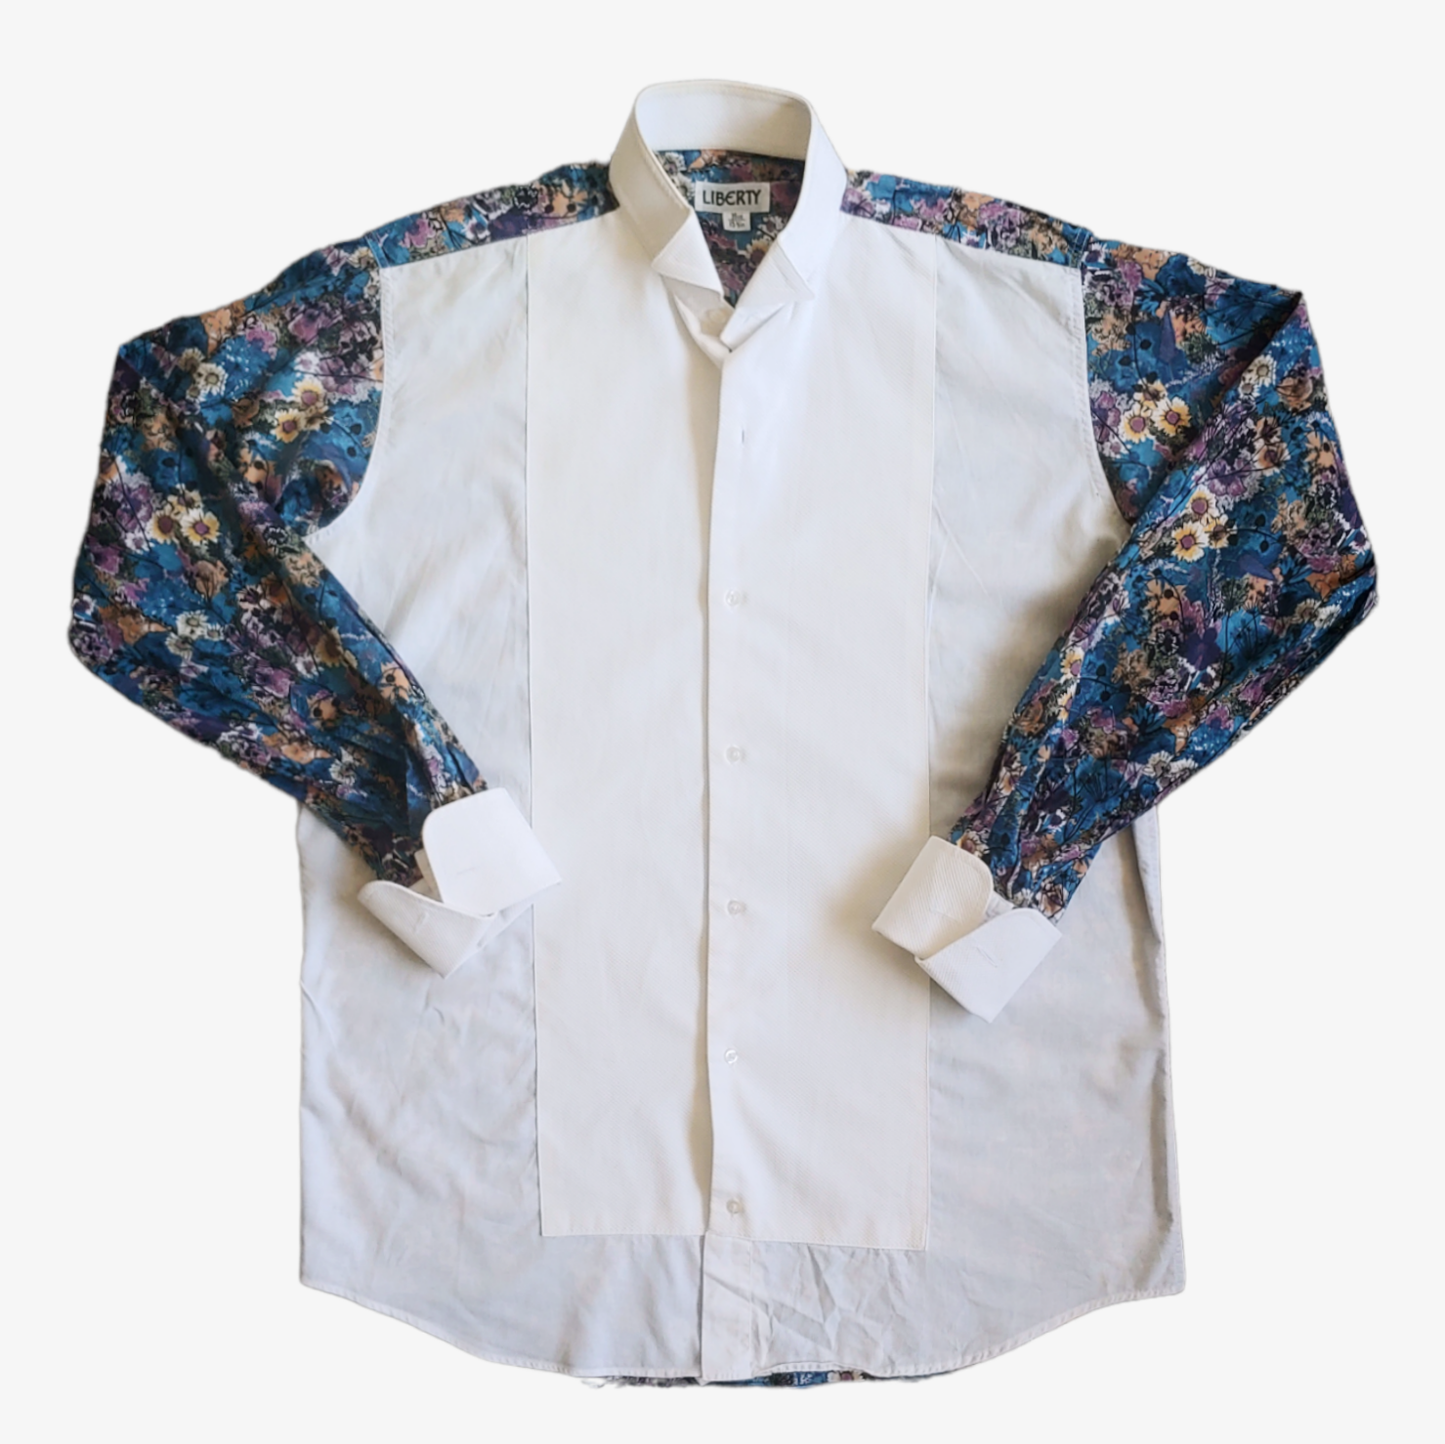 Vintage 90s Liberty Floral Long Sleeve Dress Shirt - Casspios Dream